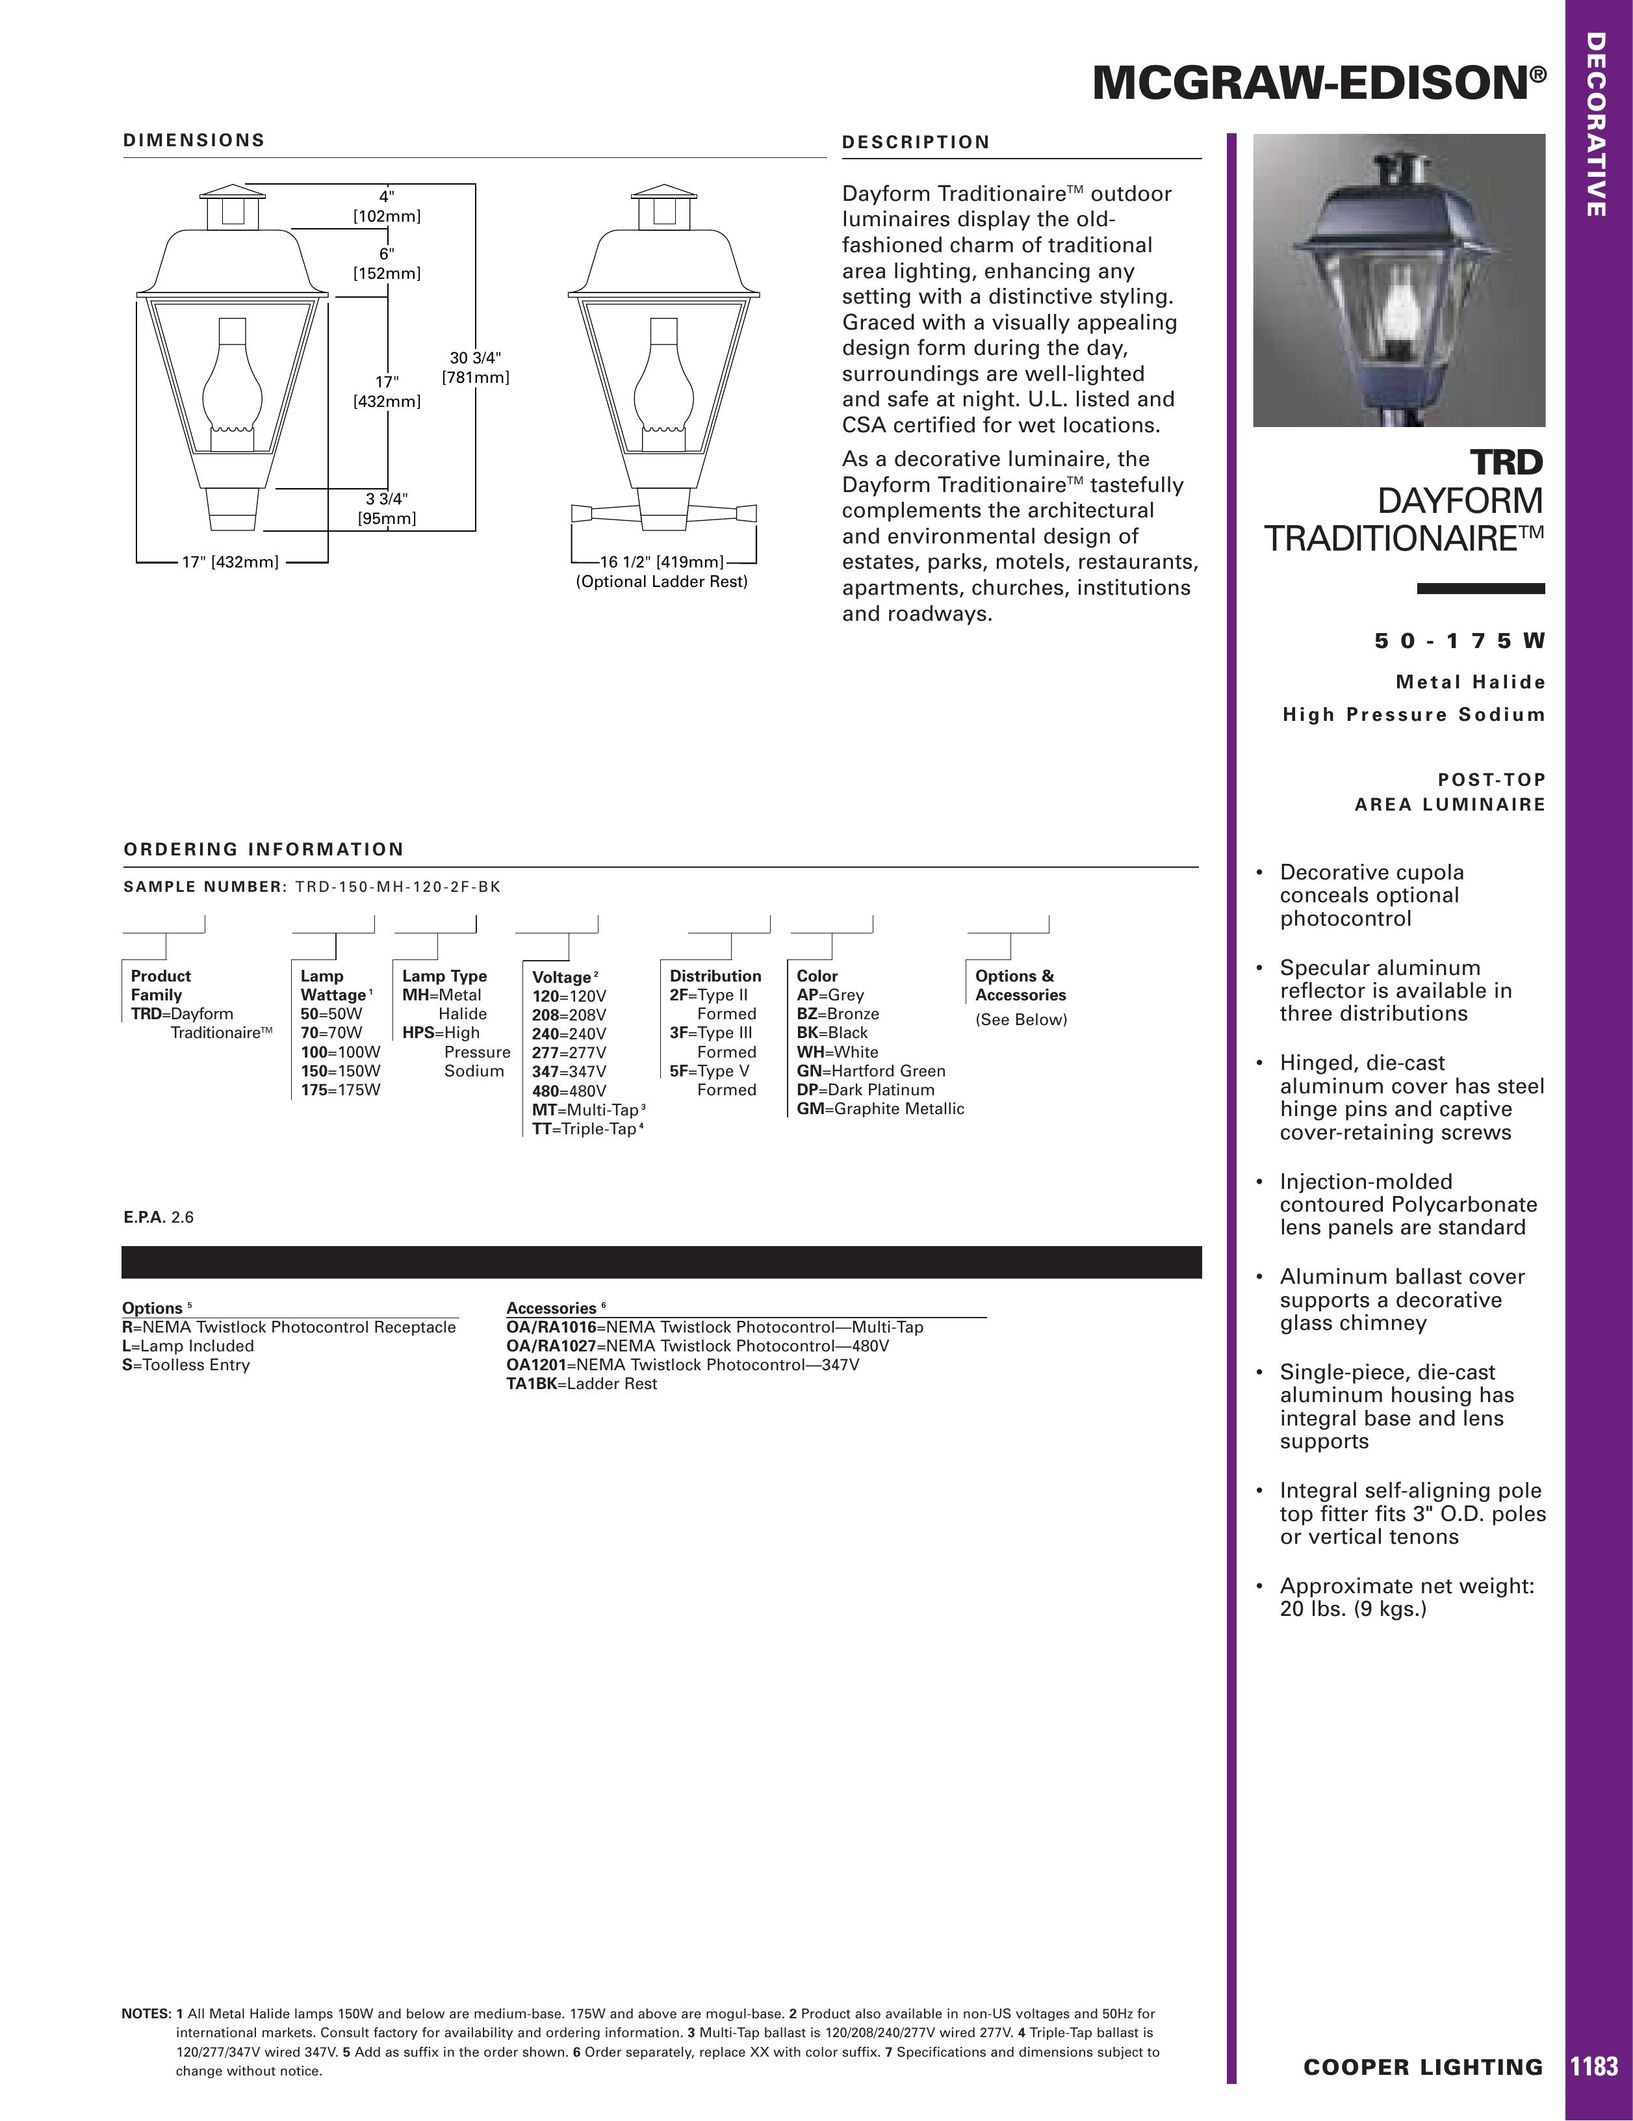 Cooper Lighting 1183 Indoor Furnishings User Manual